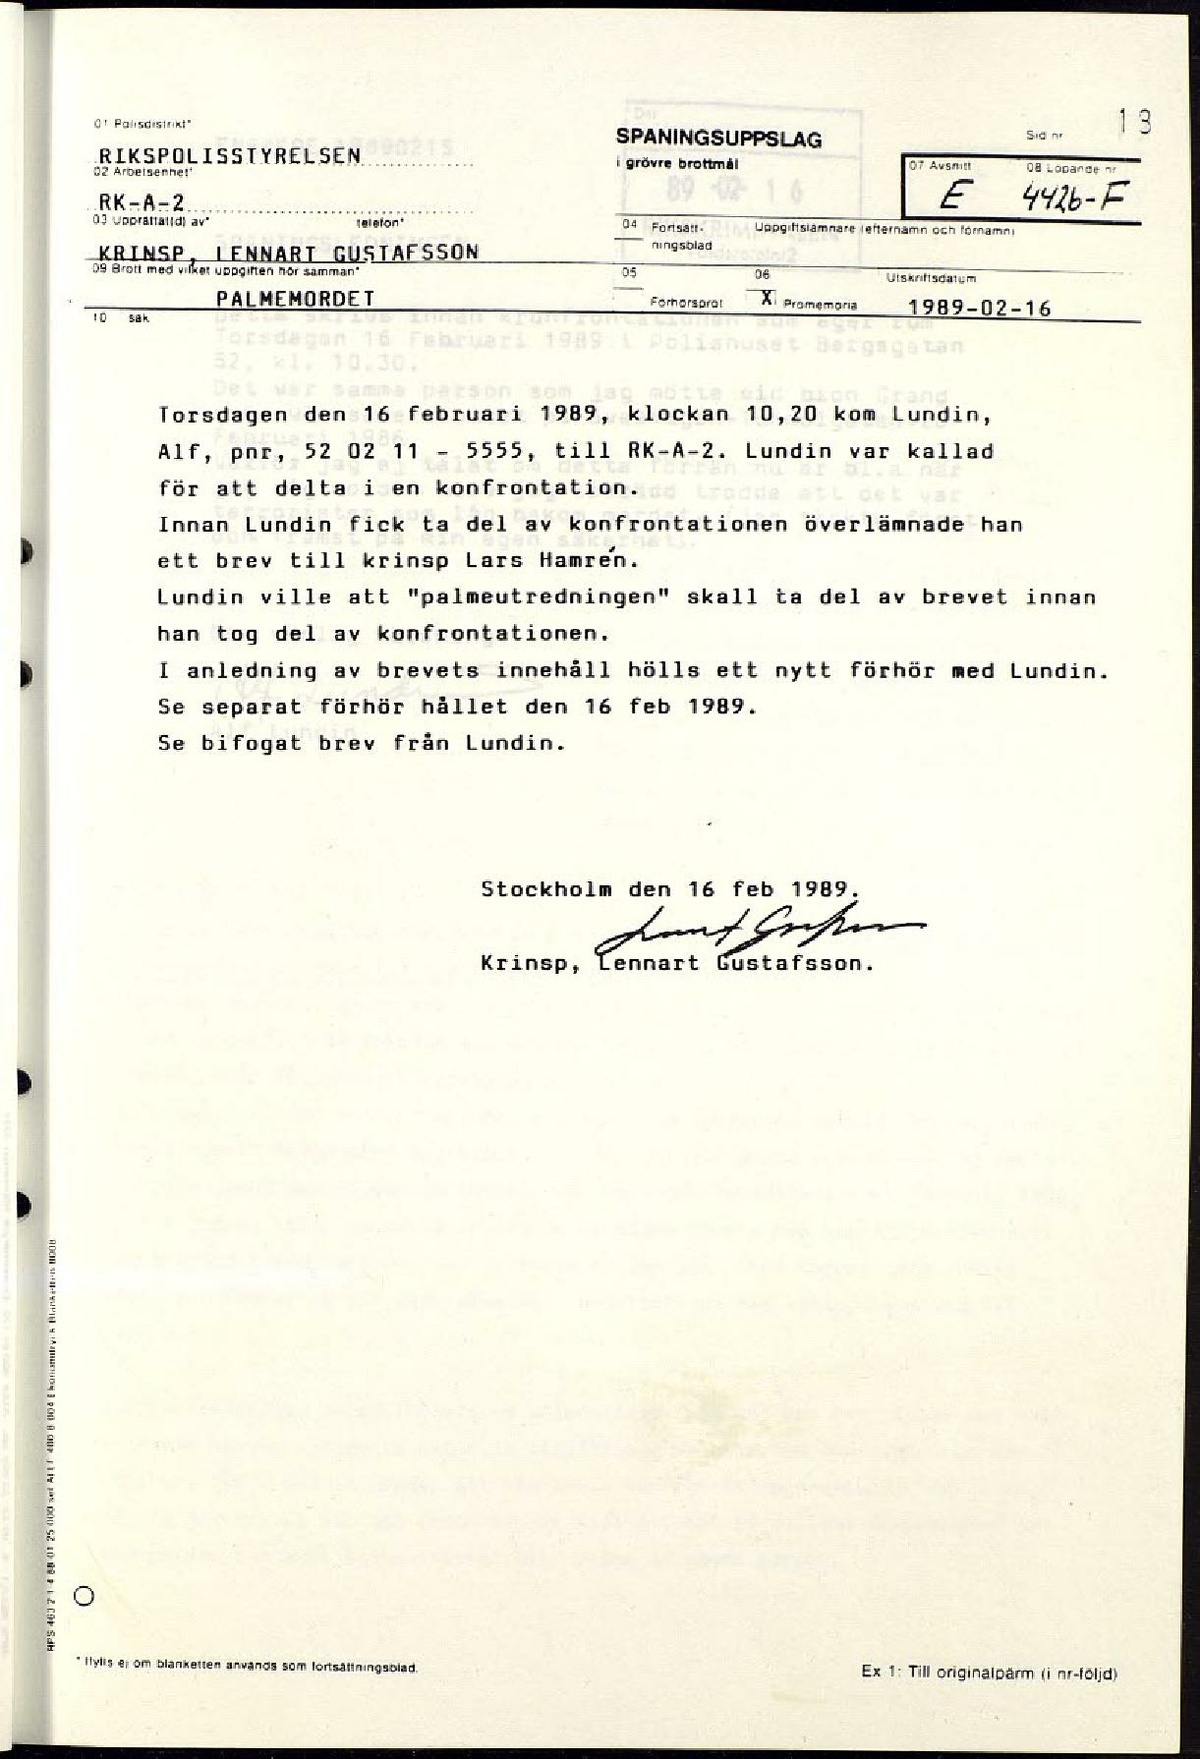 Pol-1989-02-16 E4426-00-F PM om brev av Alf Lundin om gärningsmannen som mördade Olof Palme.pdf